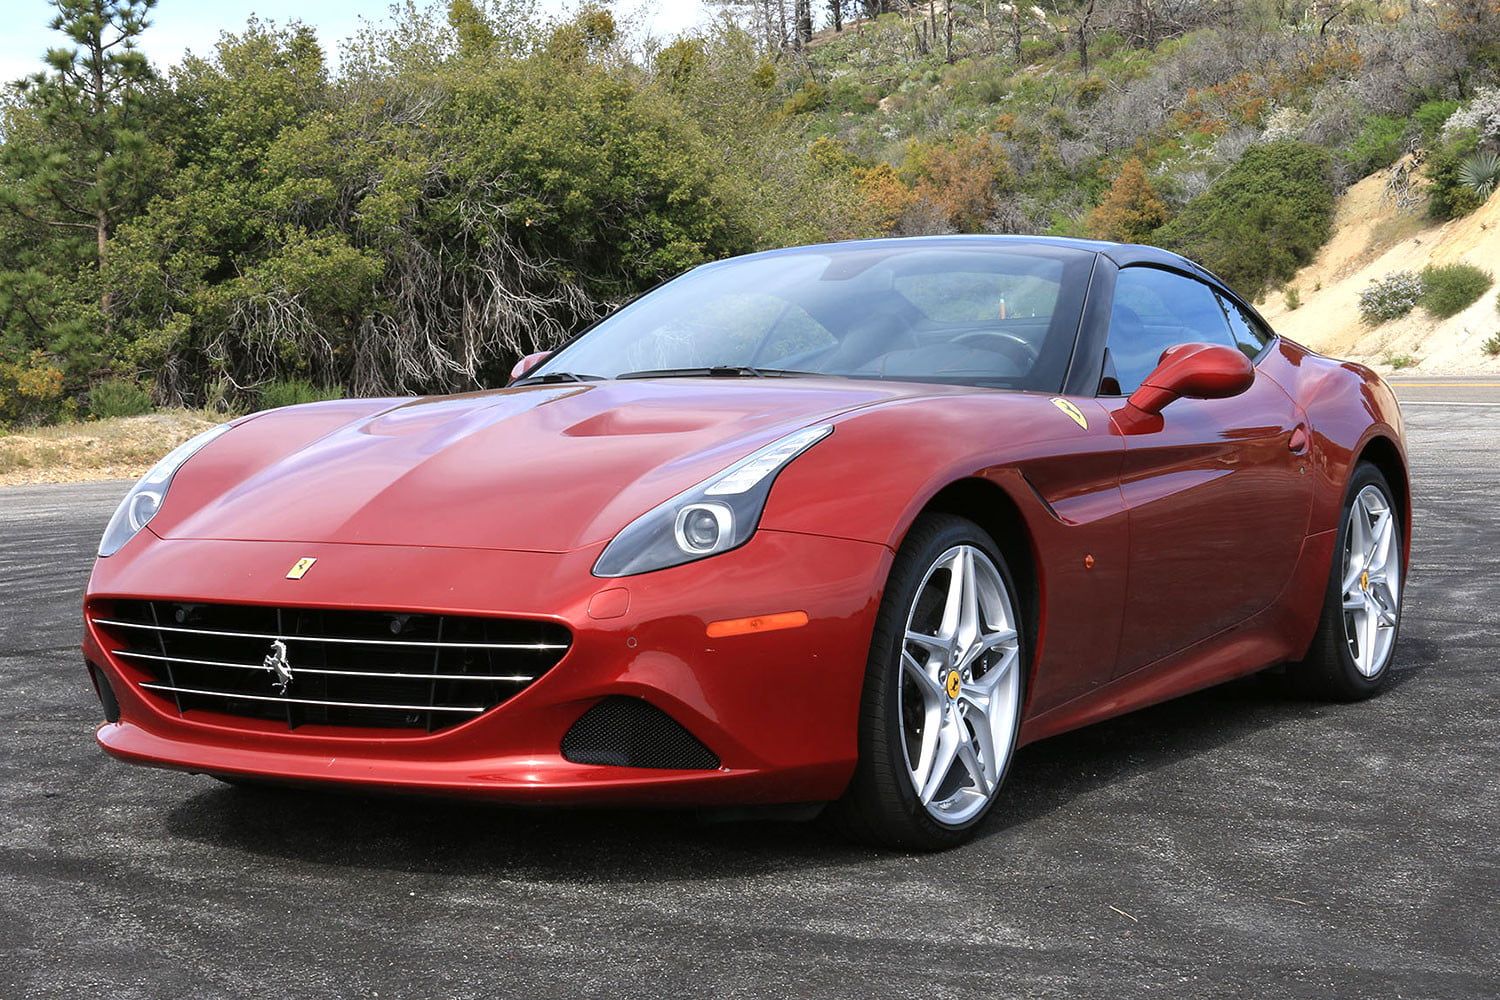 Red Ferrari California